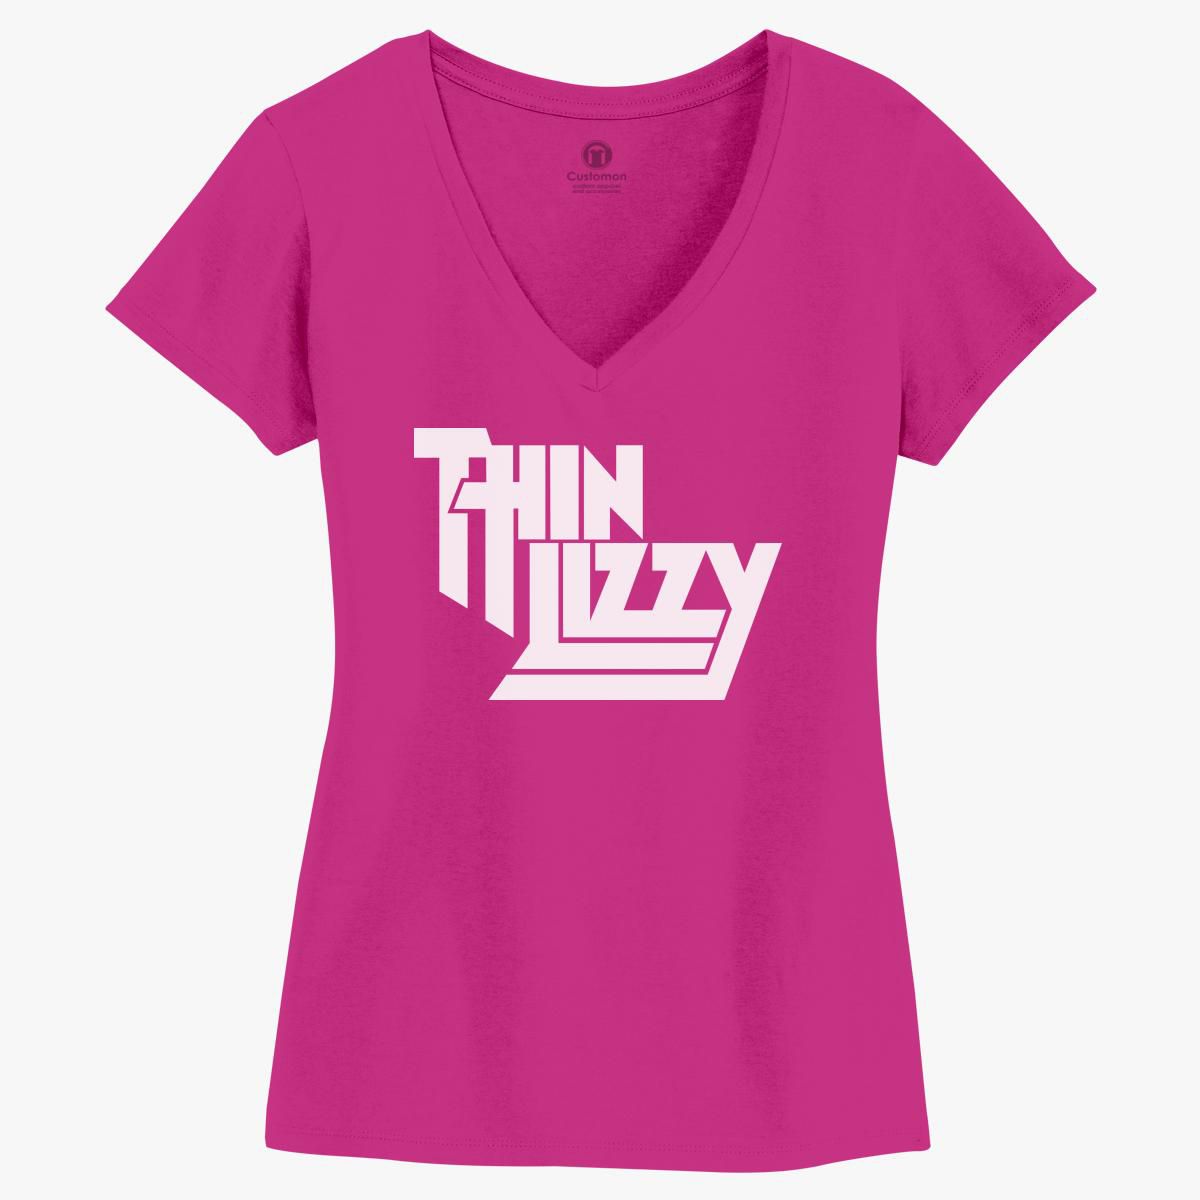 thin lizzy t shirt